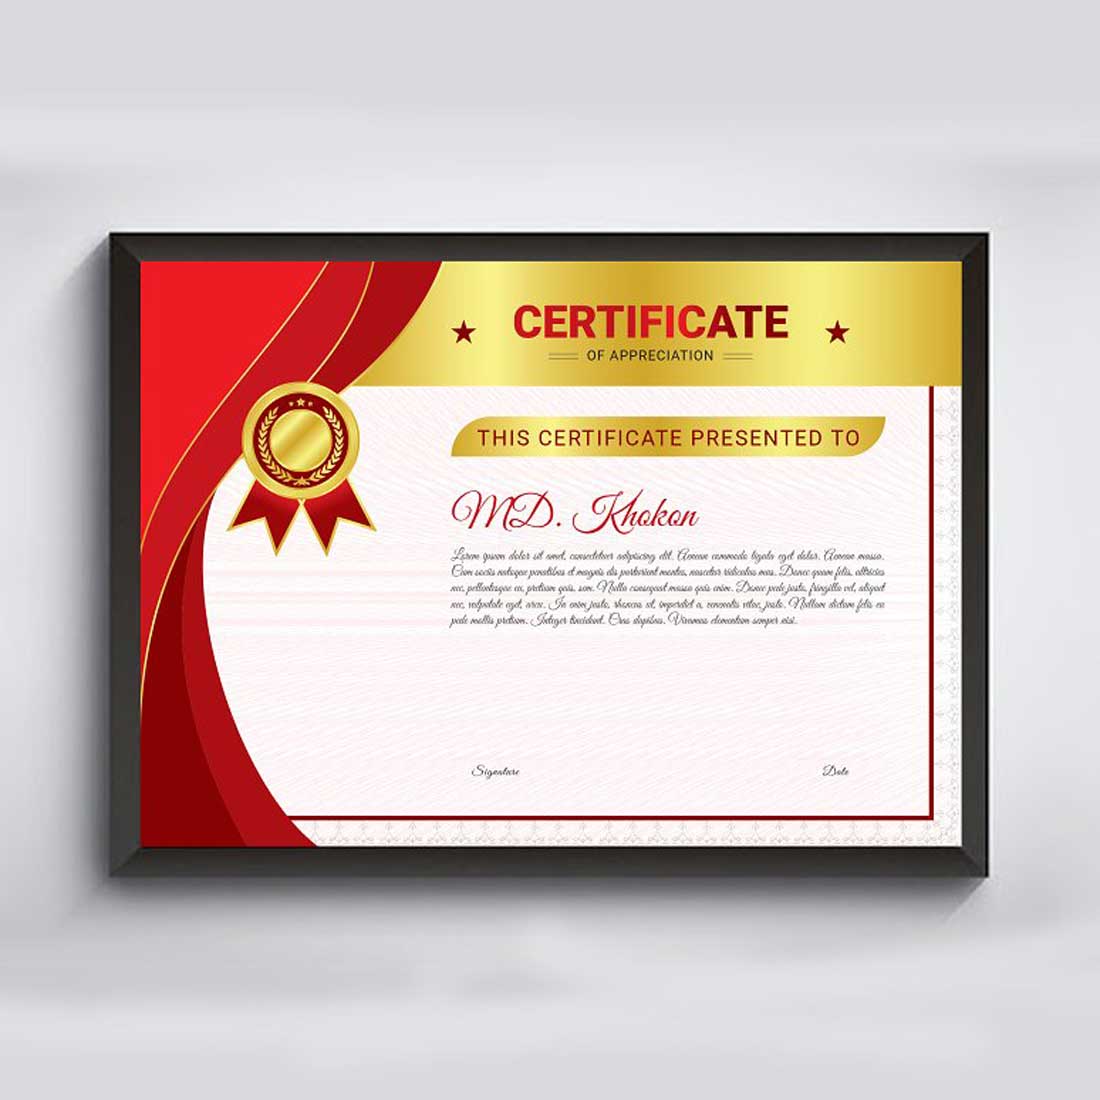 Multipurpose Certificate Template preview image.